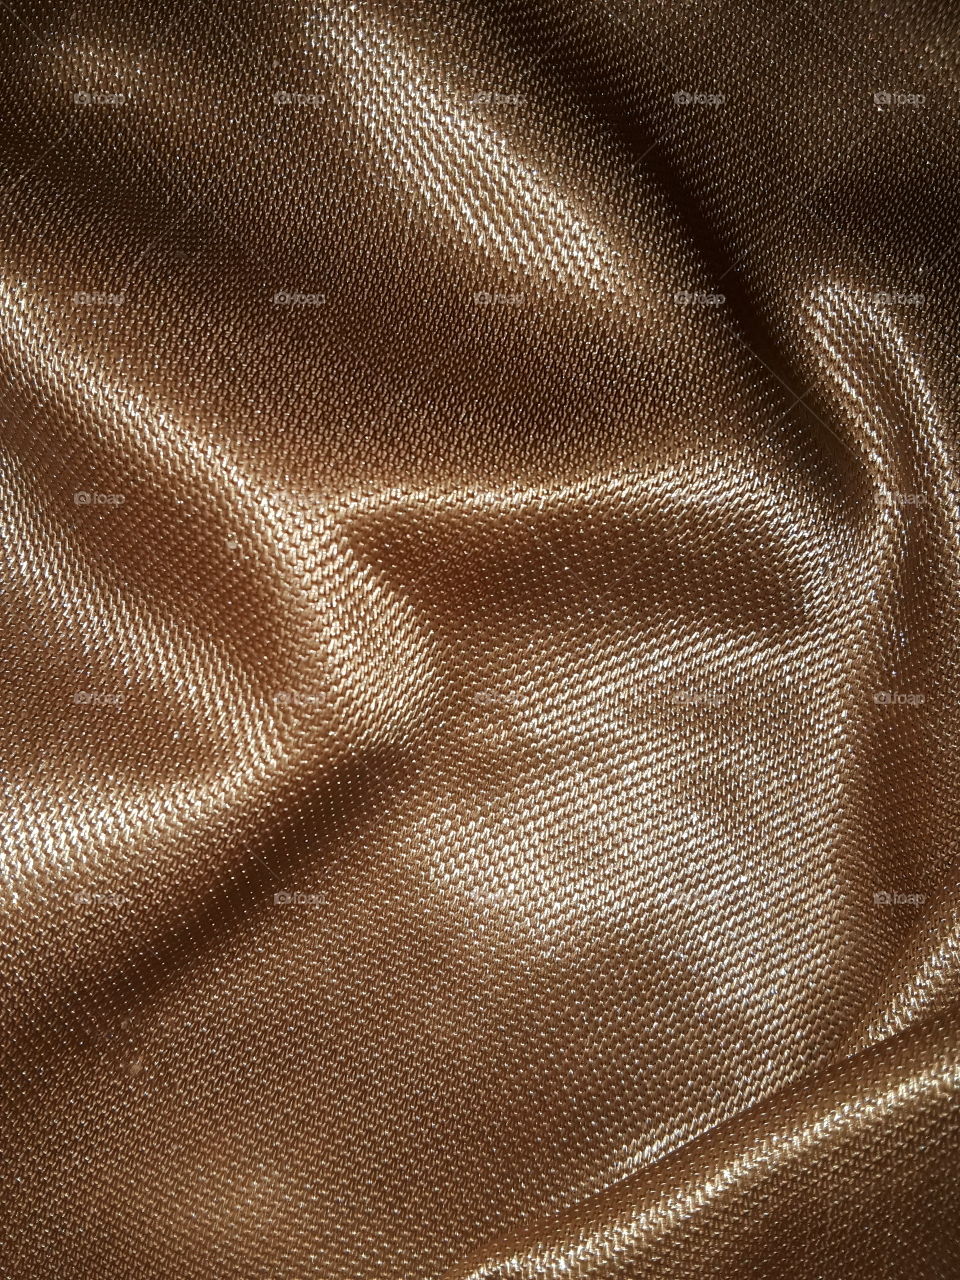 gold fabric